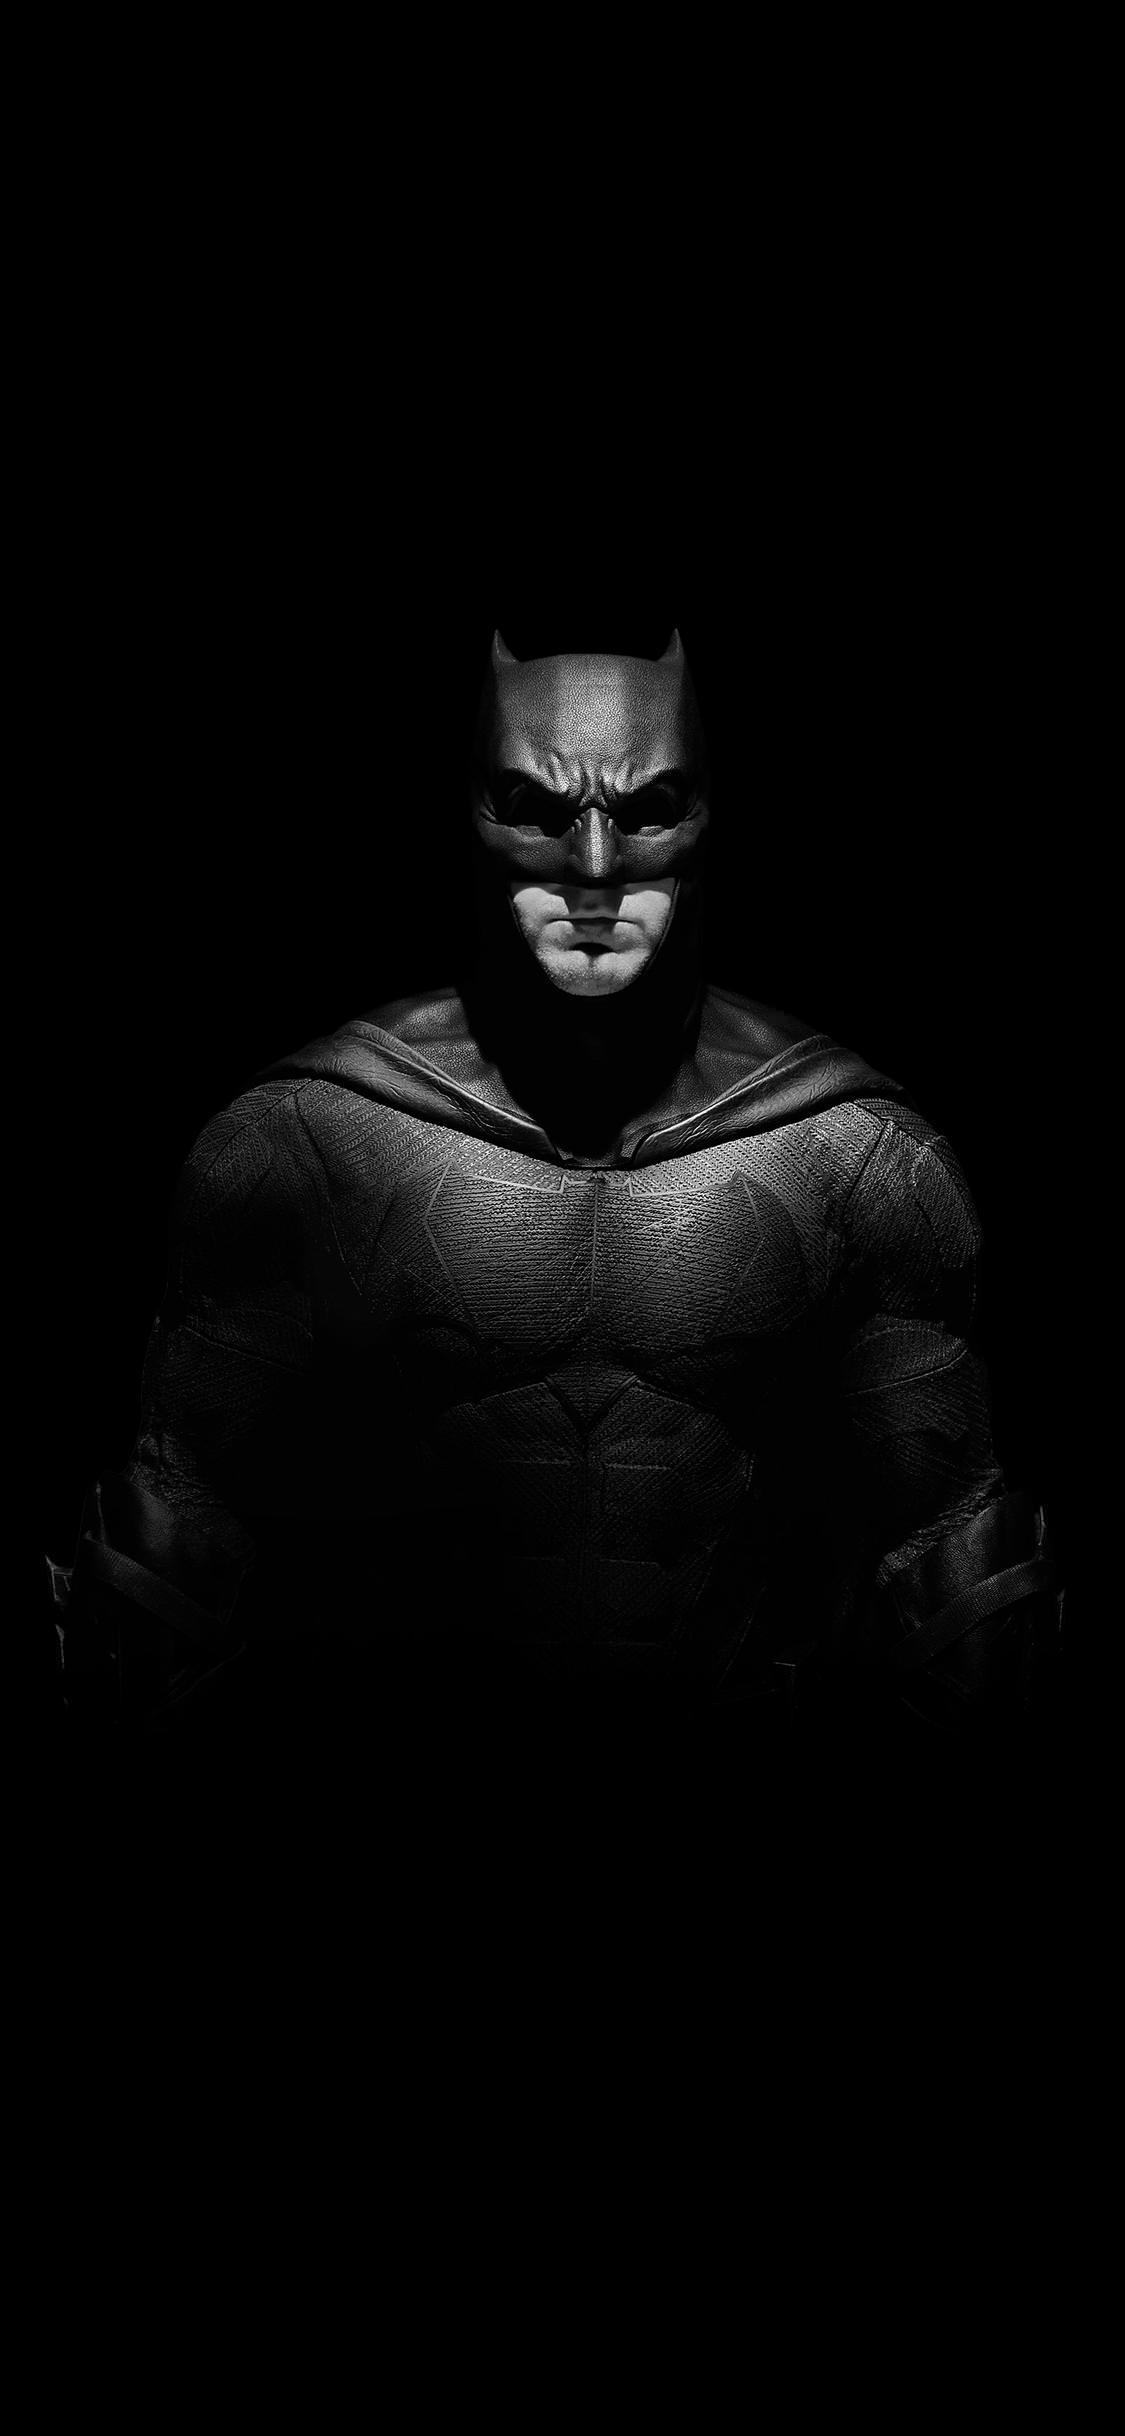 Download wallpaper 750x1334 dark, black & white, superhero